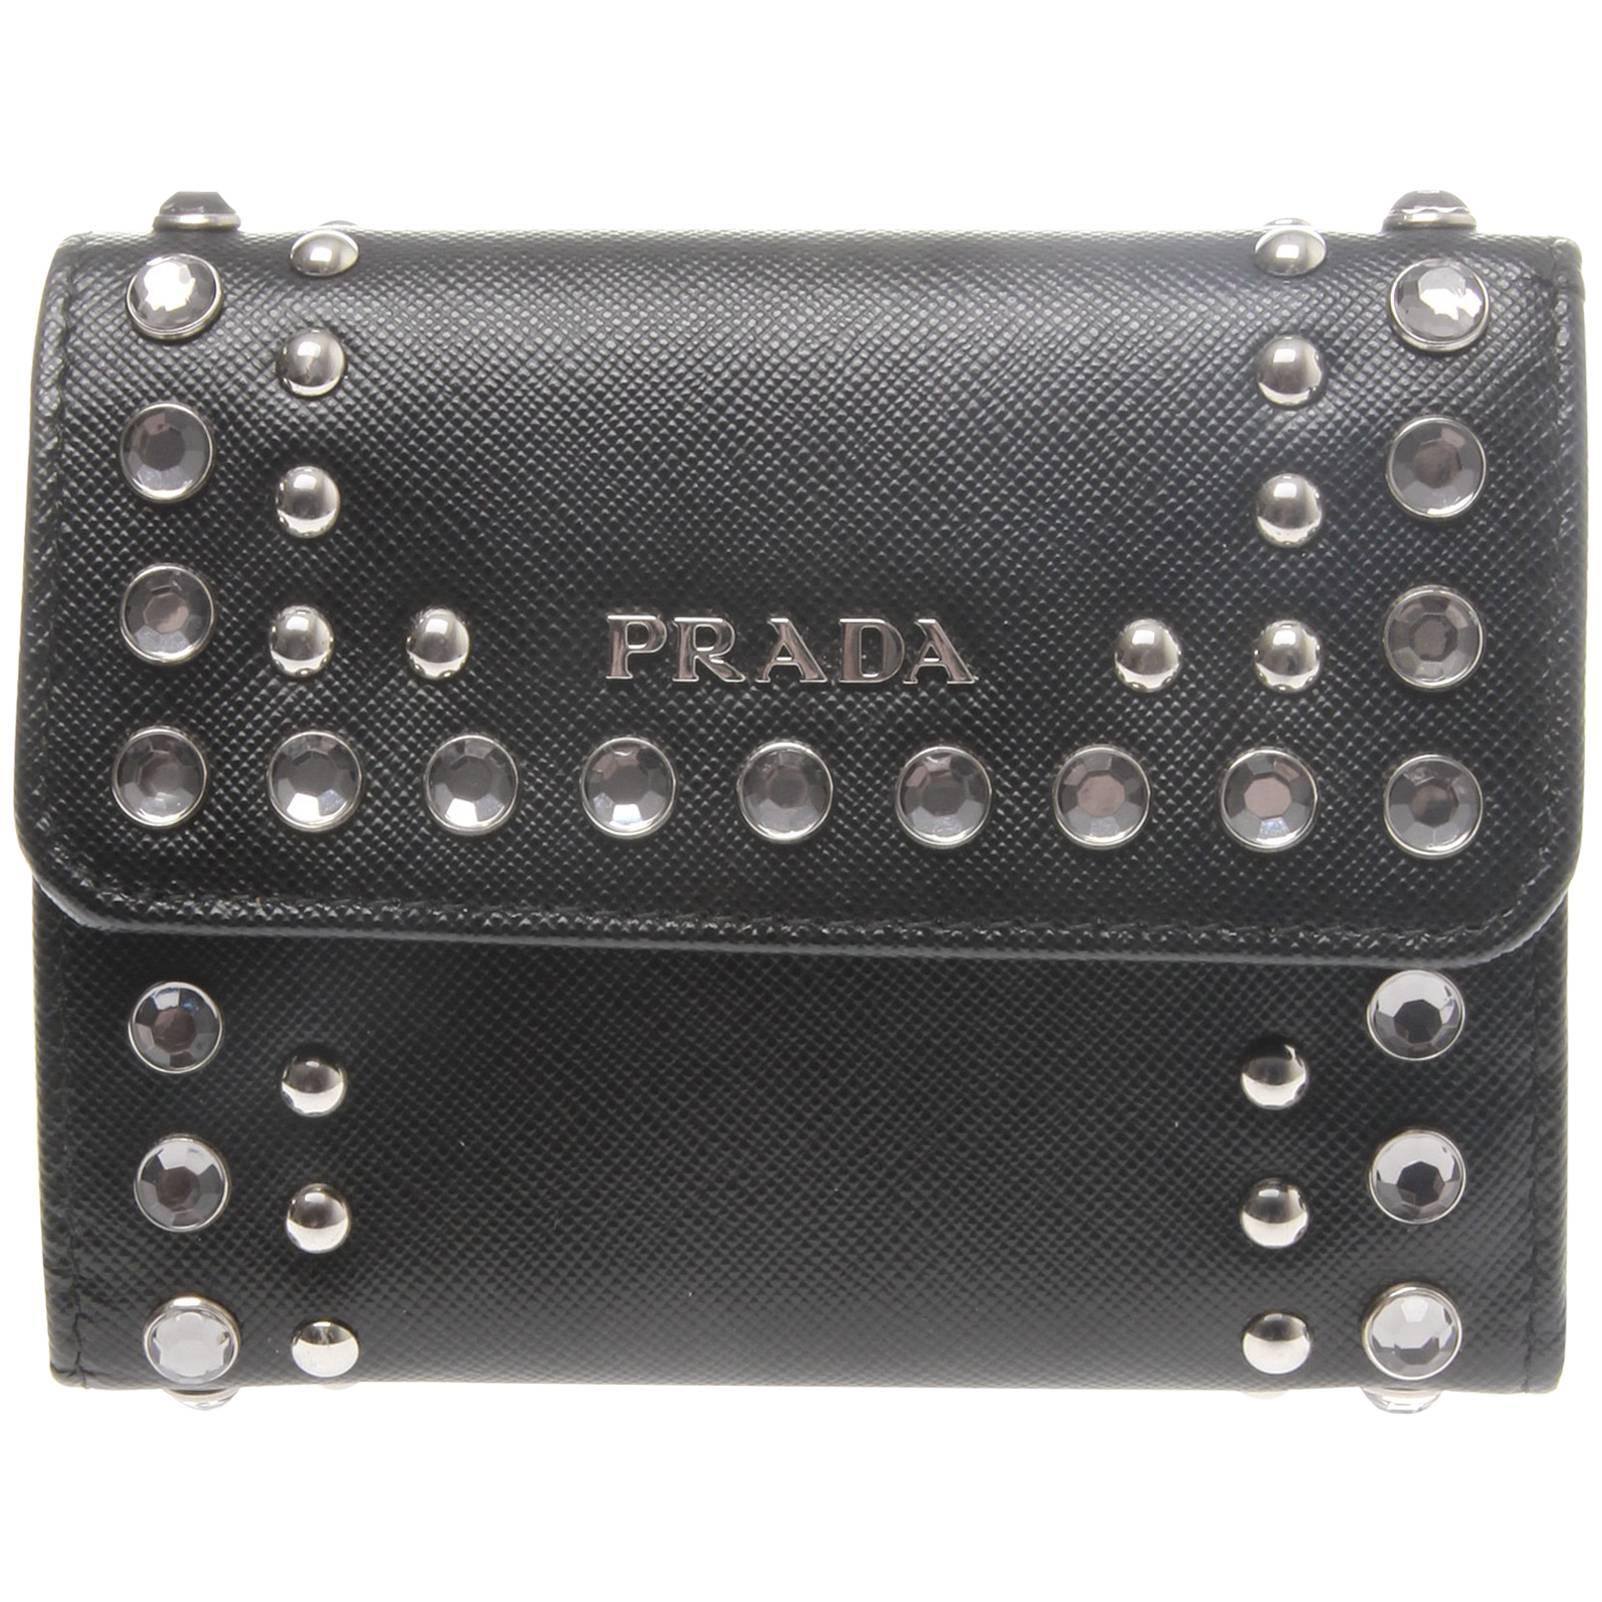 prada studded wallet